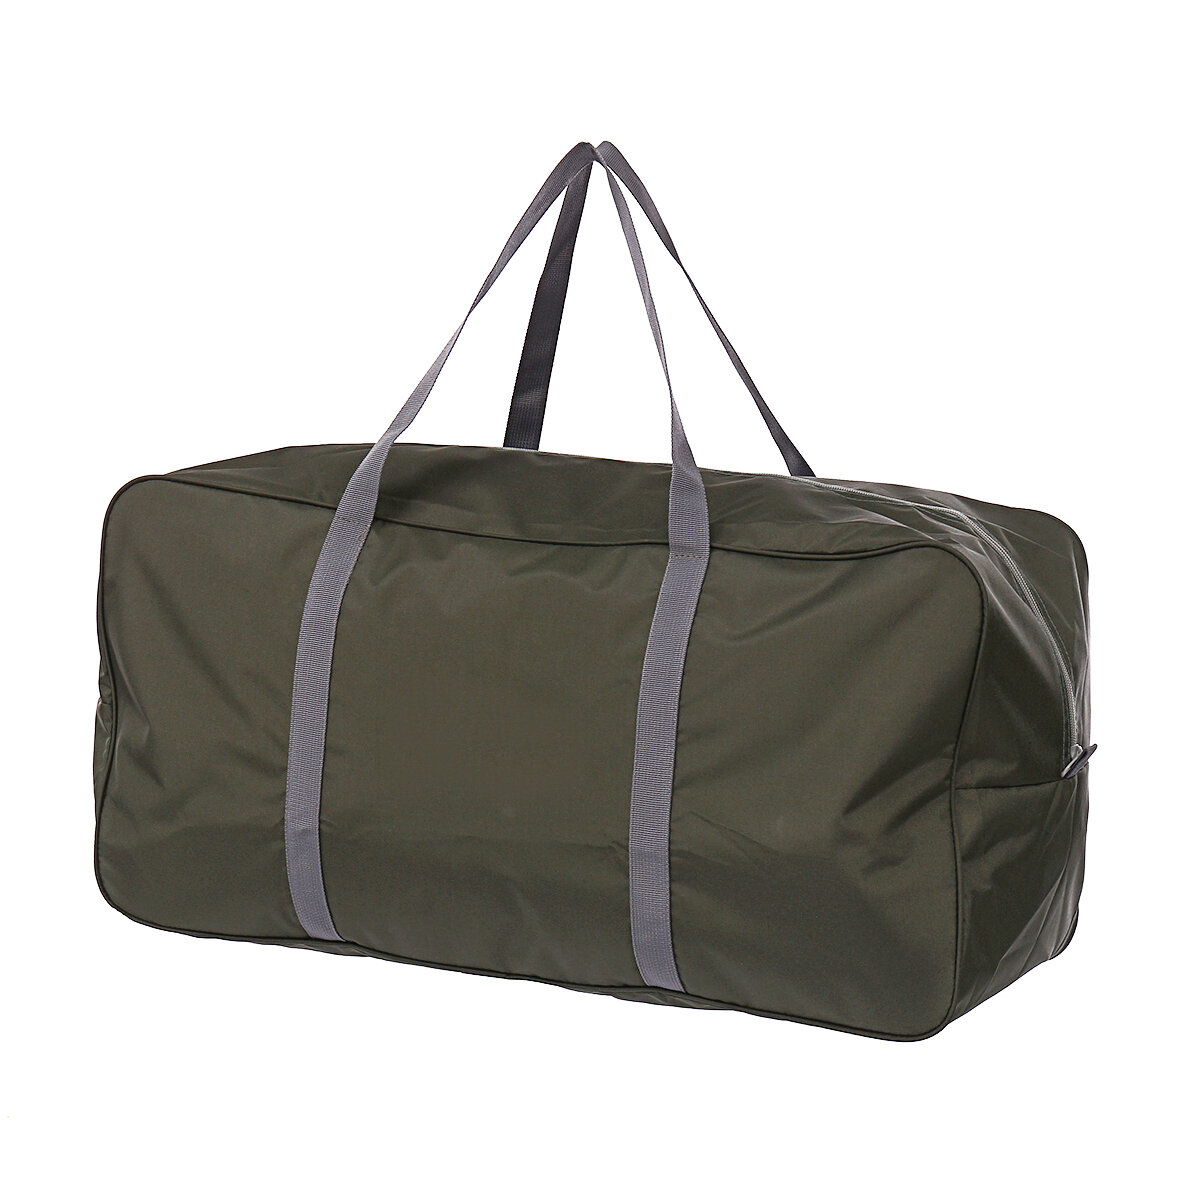 Outdoor Bag 45L/21L Oxford Large Duffle Bag Traveling Camping Tents Luggage Storage Handbag Sport Moving Bag Waterproof